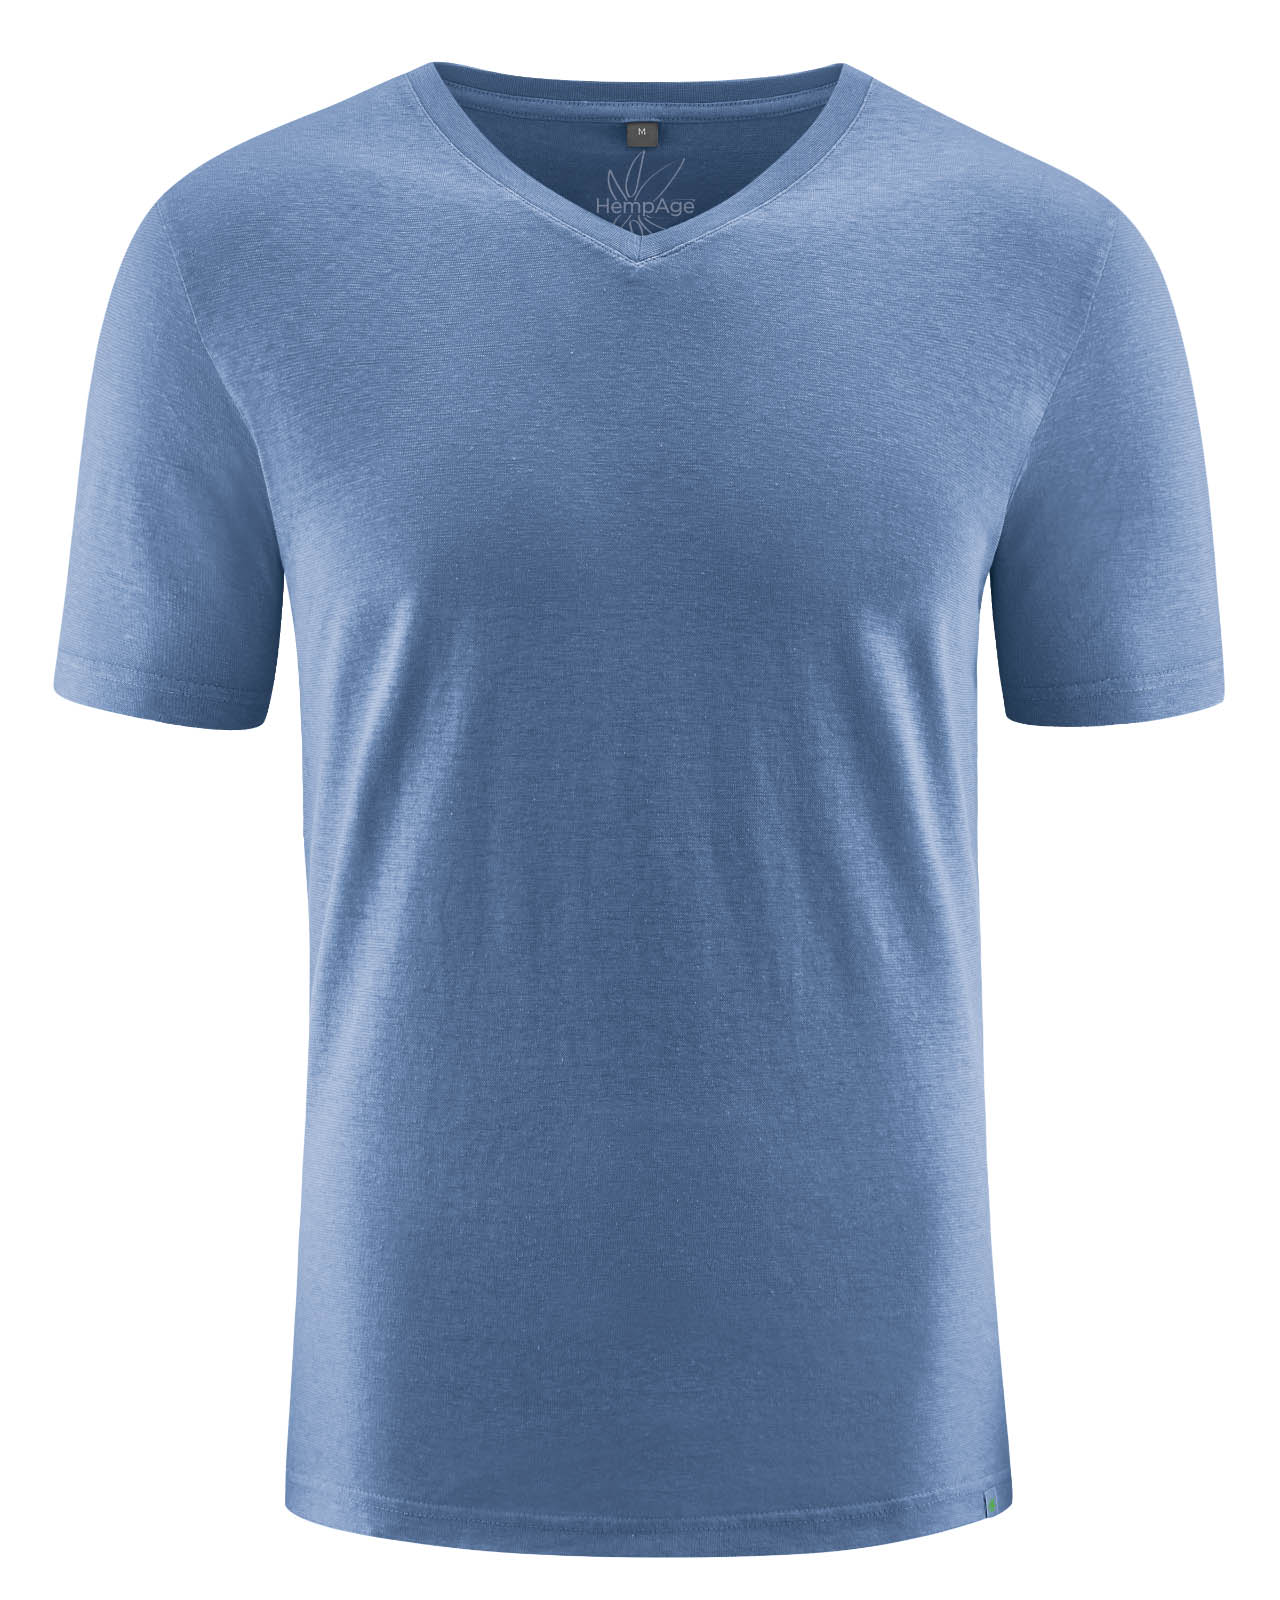 t-shirt chanvre bio DH842_blueberry